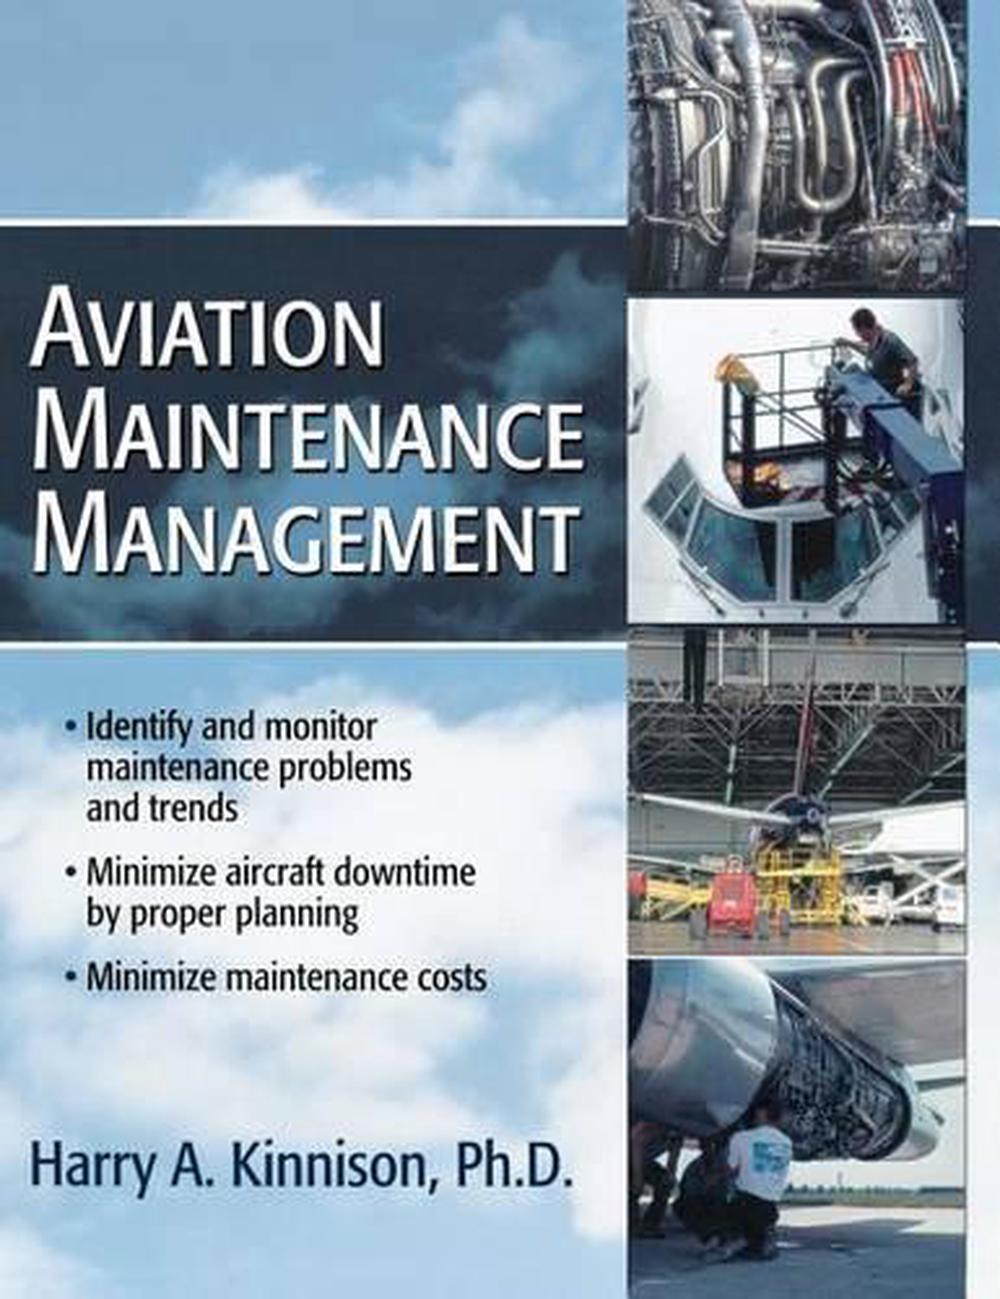 flight school inventory maintenance managment